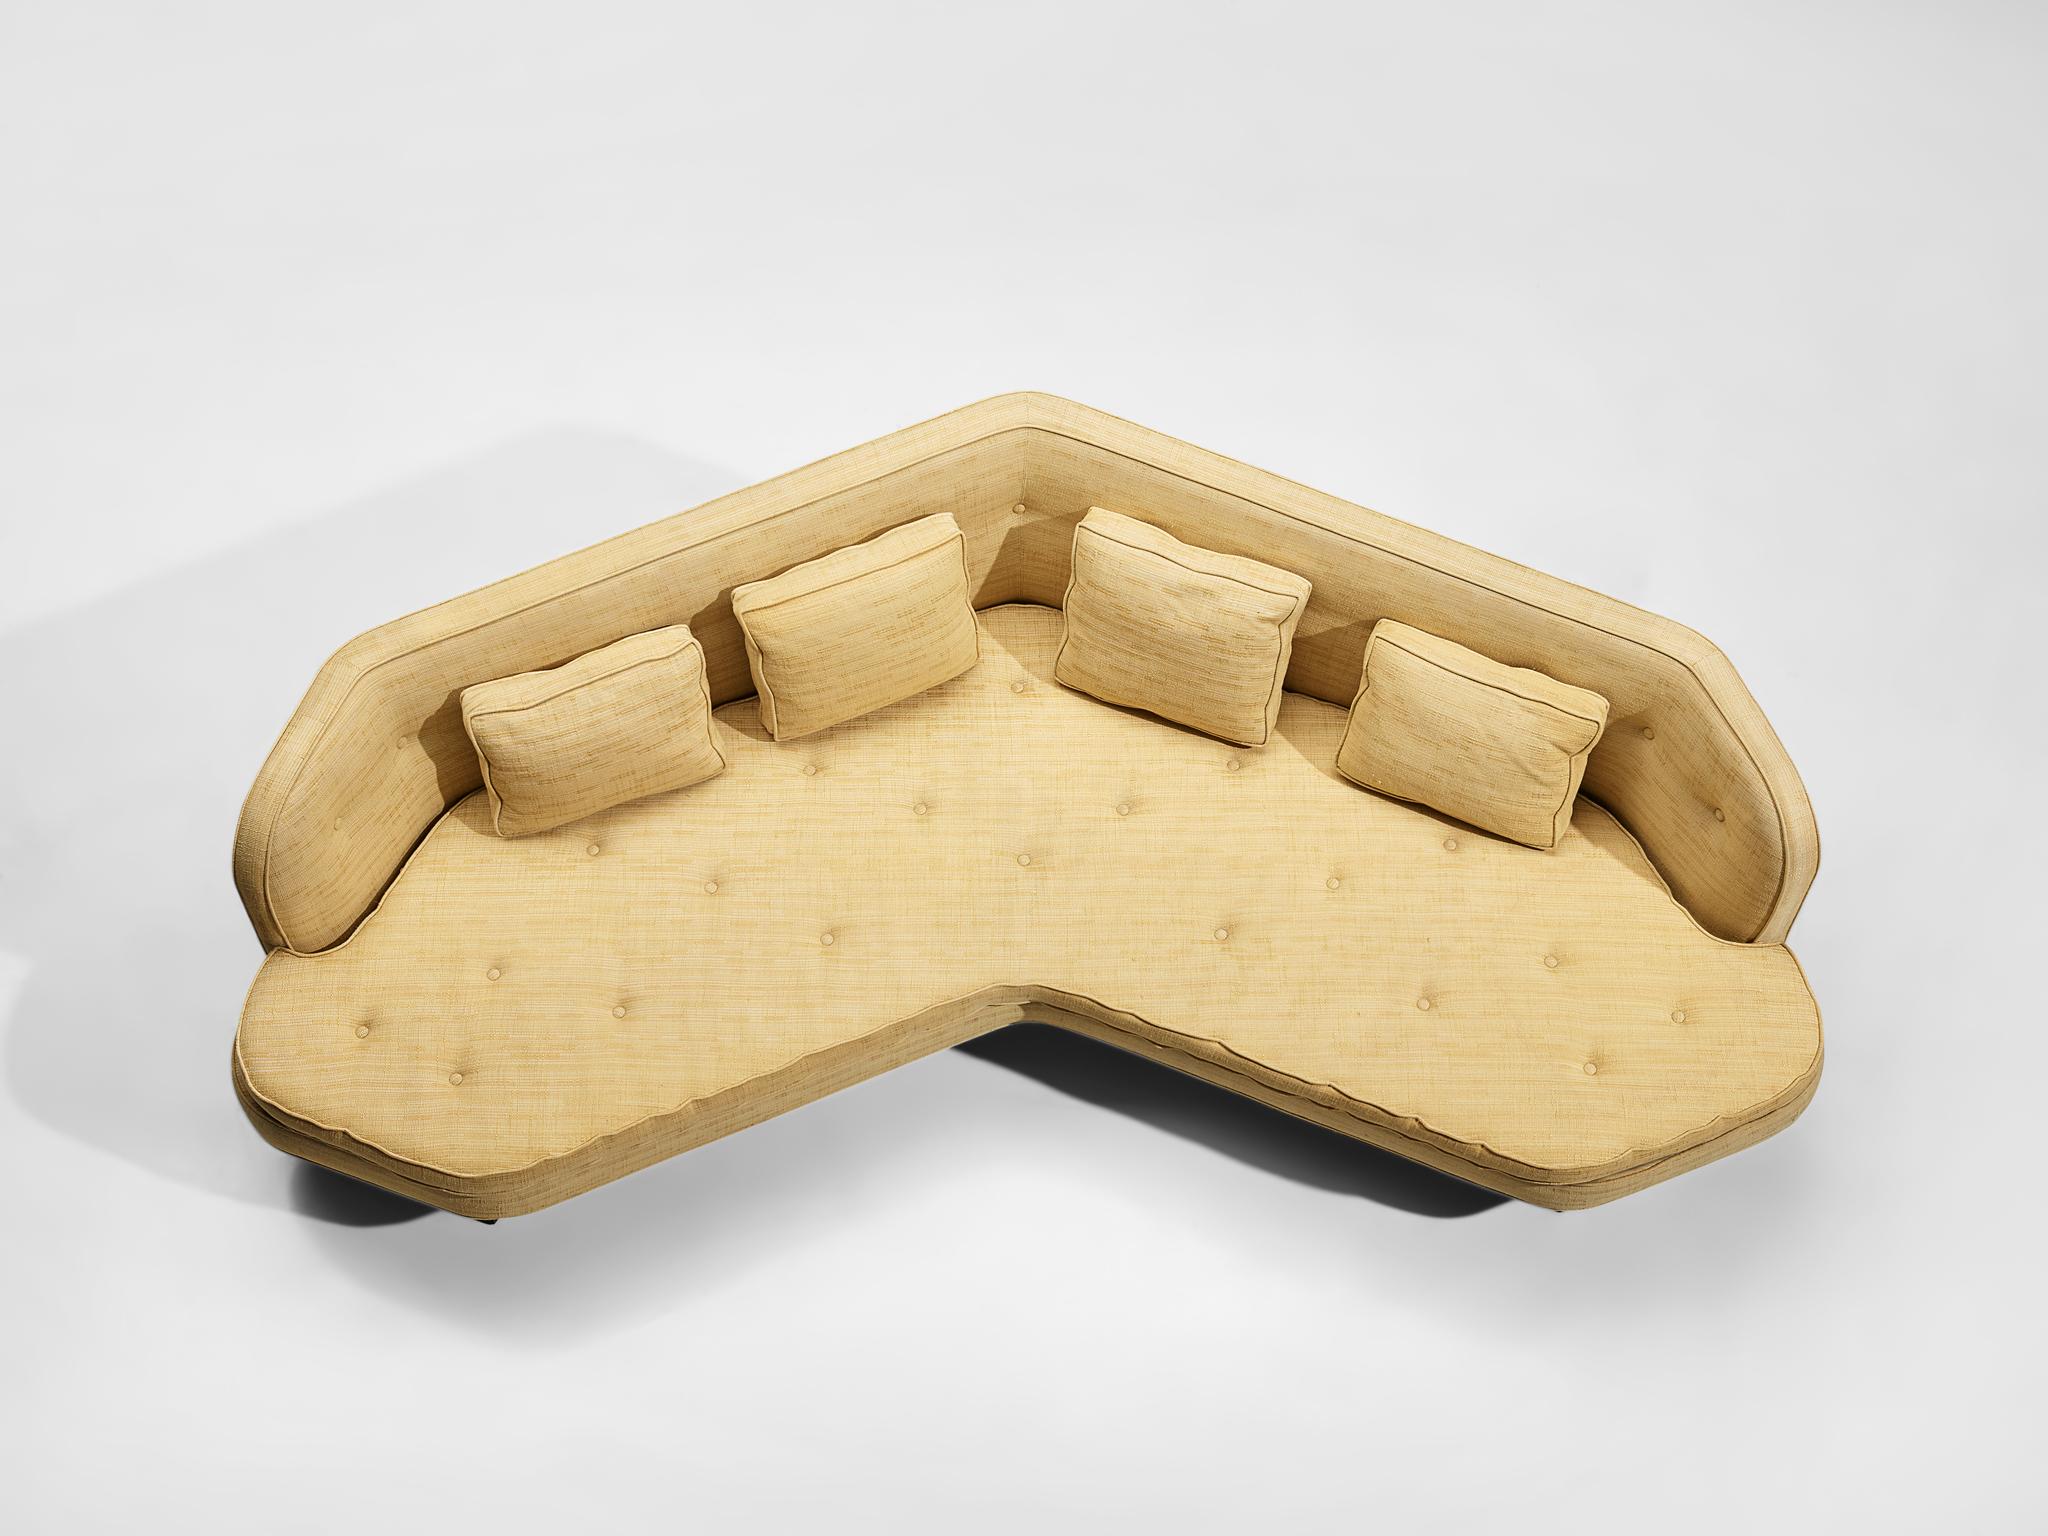 Edward Wormley 'Janus' Sofa in Cream Upholstery 1